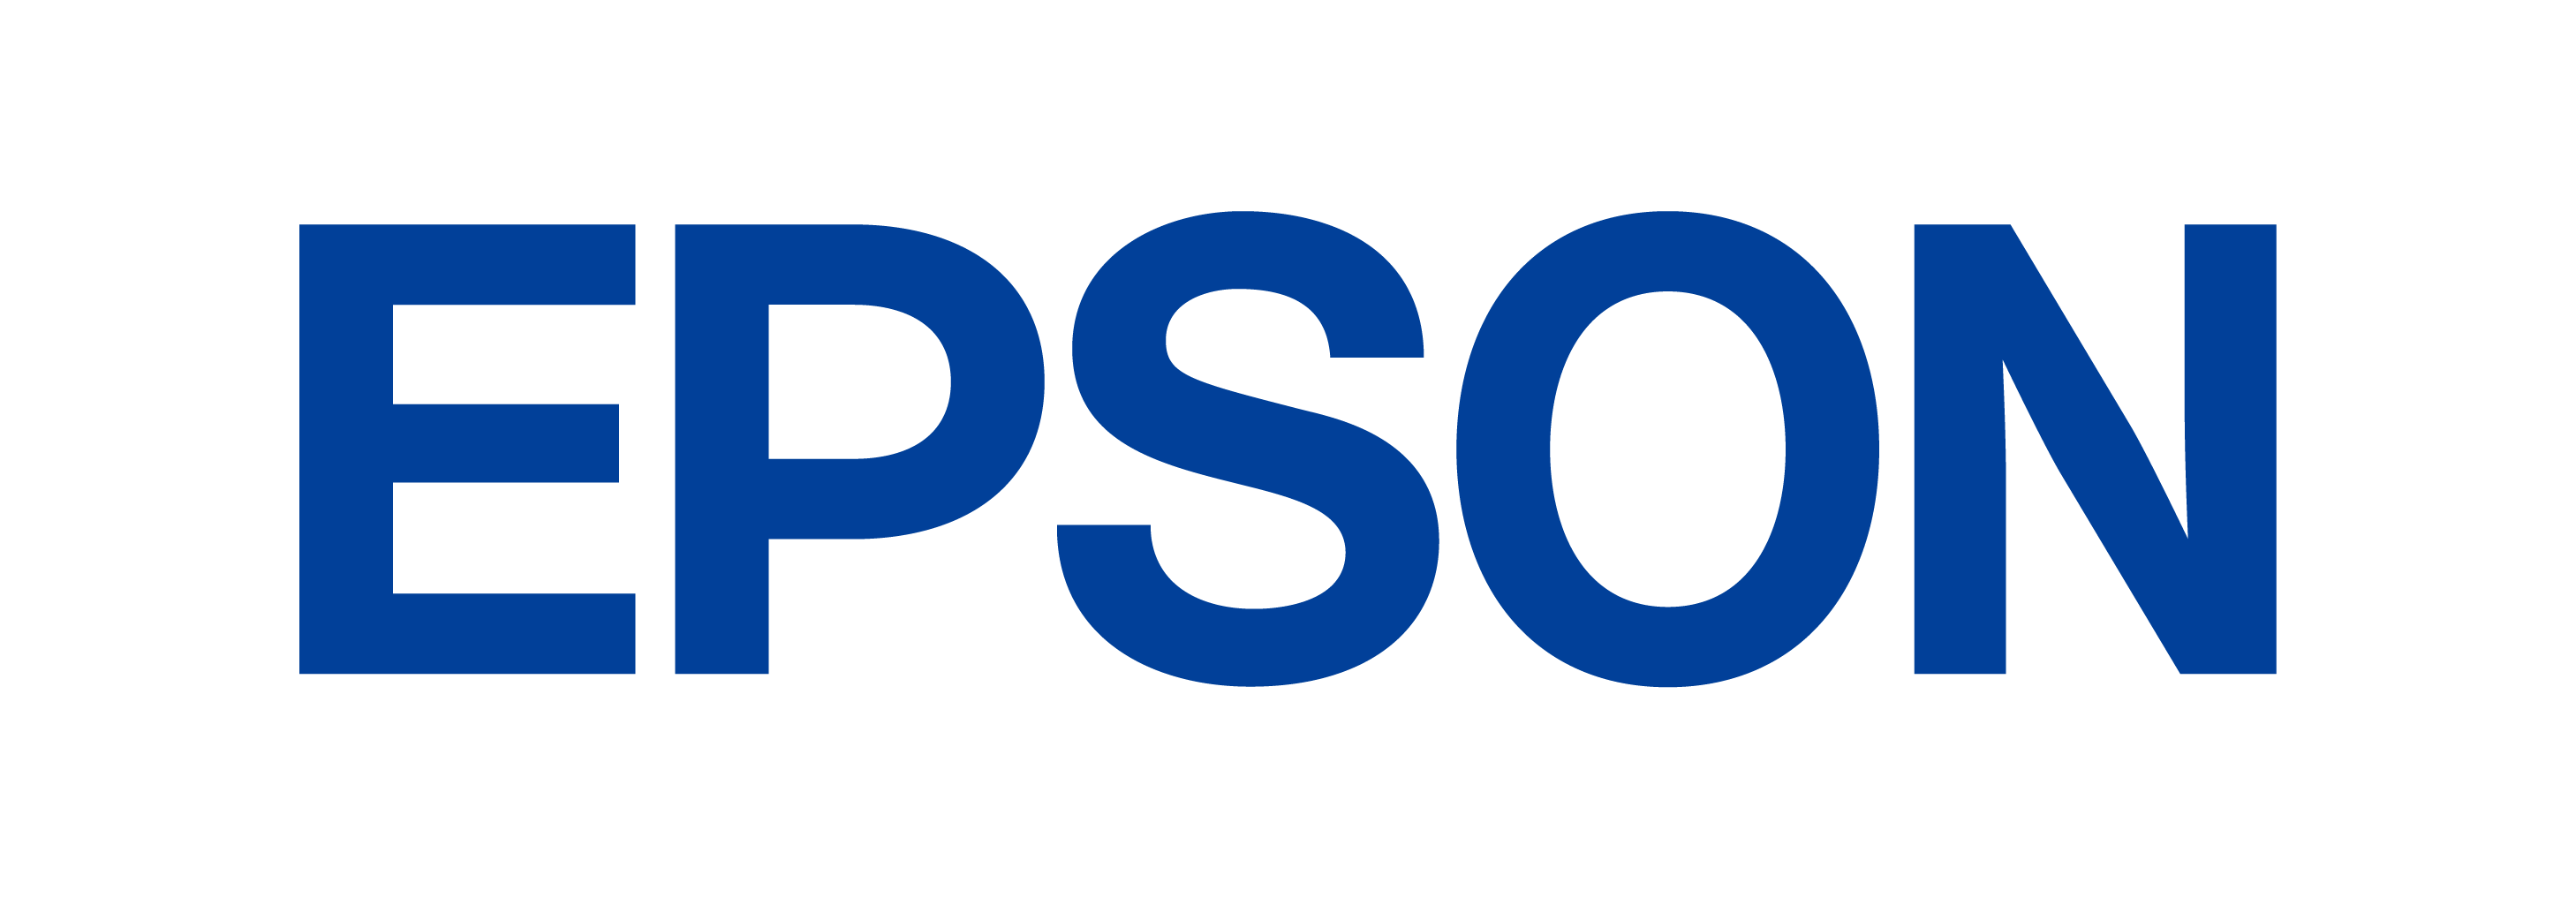 Printer Epson Business Canon Fashion Brands Logo Clipart